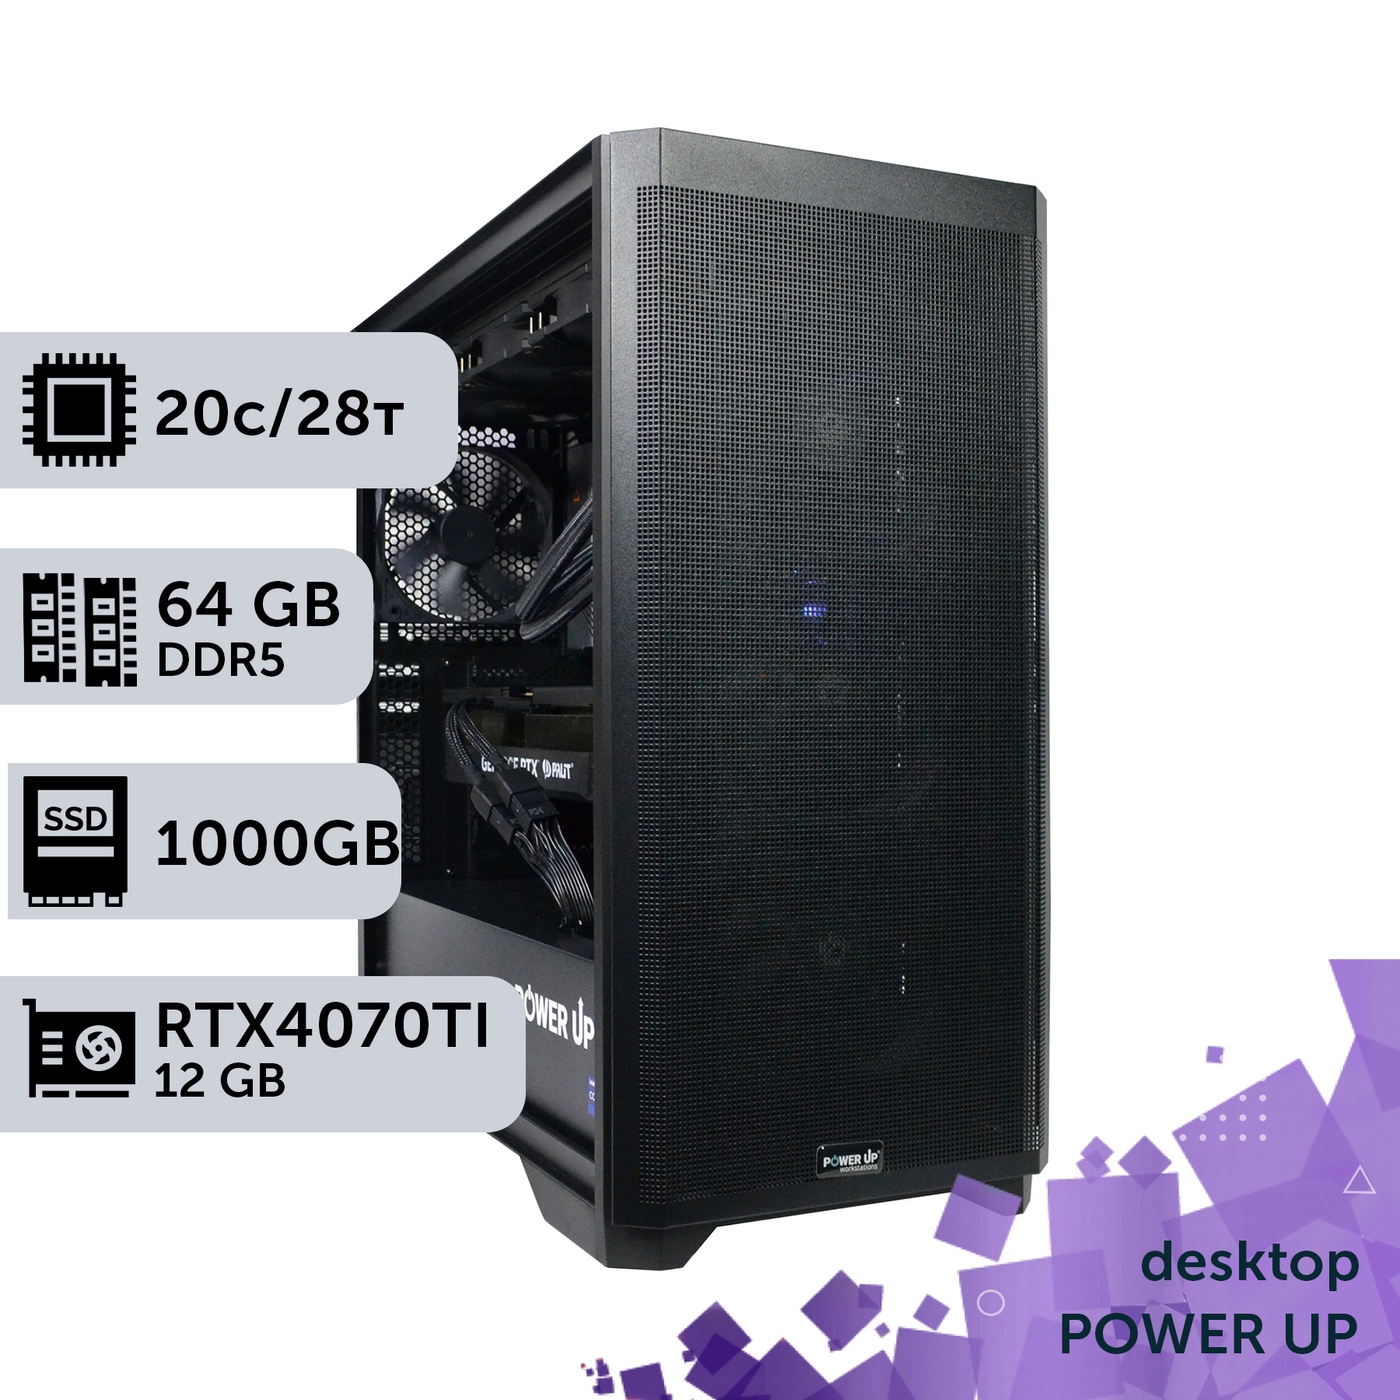 Рабочая станция PowerUp Desktop #351 Core i7 14700K/64 GB/SSD 1TB/GeForce RTX 4070Ti 12GB